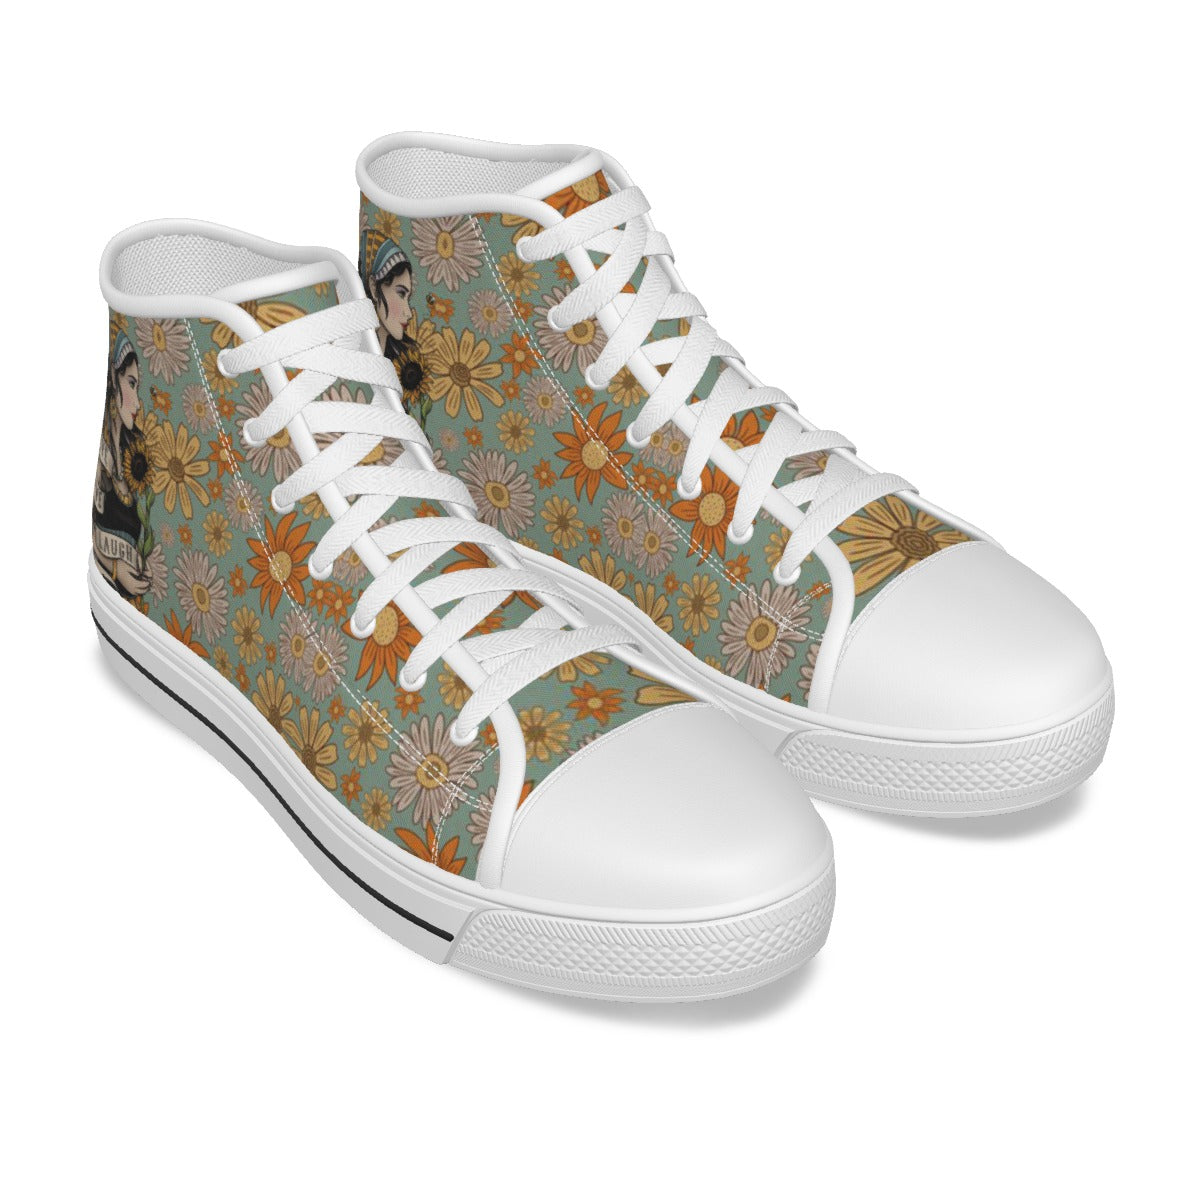 EShoes Personalized Flower Women's Canvas Shoes, Flower Shoes, Custom Shoes, Hippie Shoes.